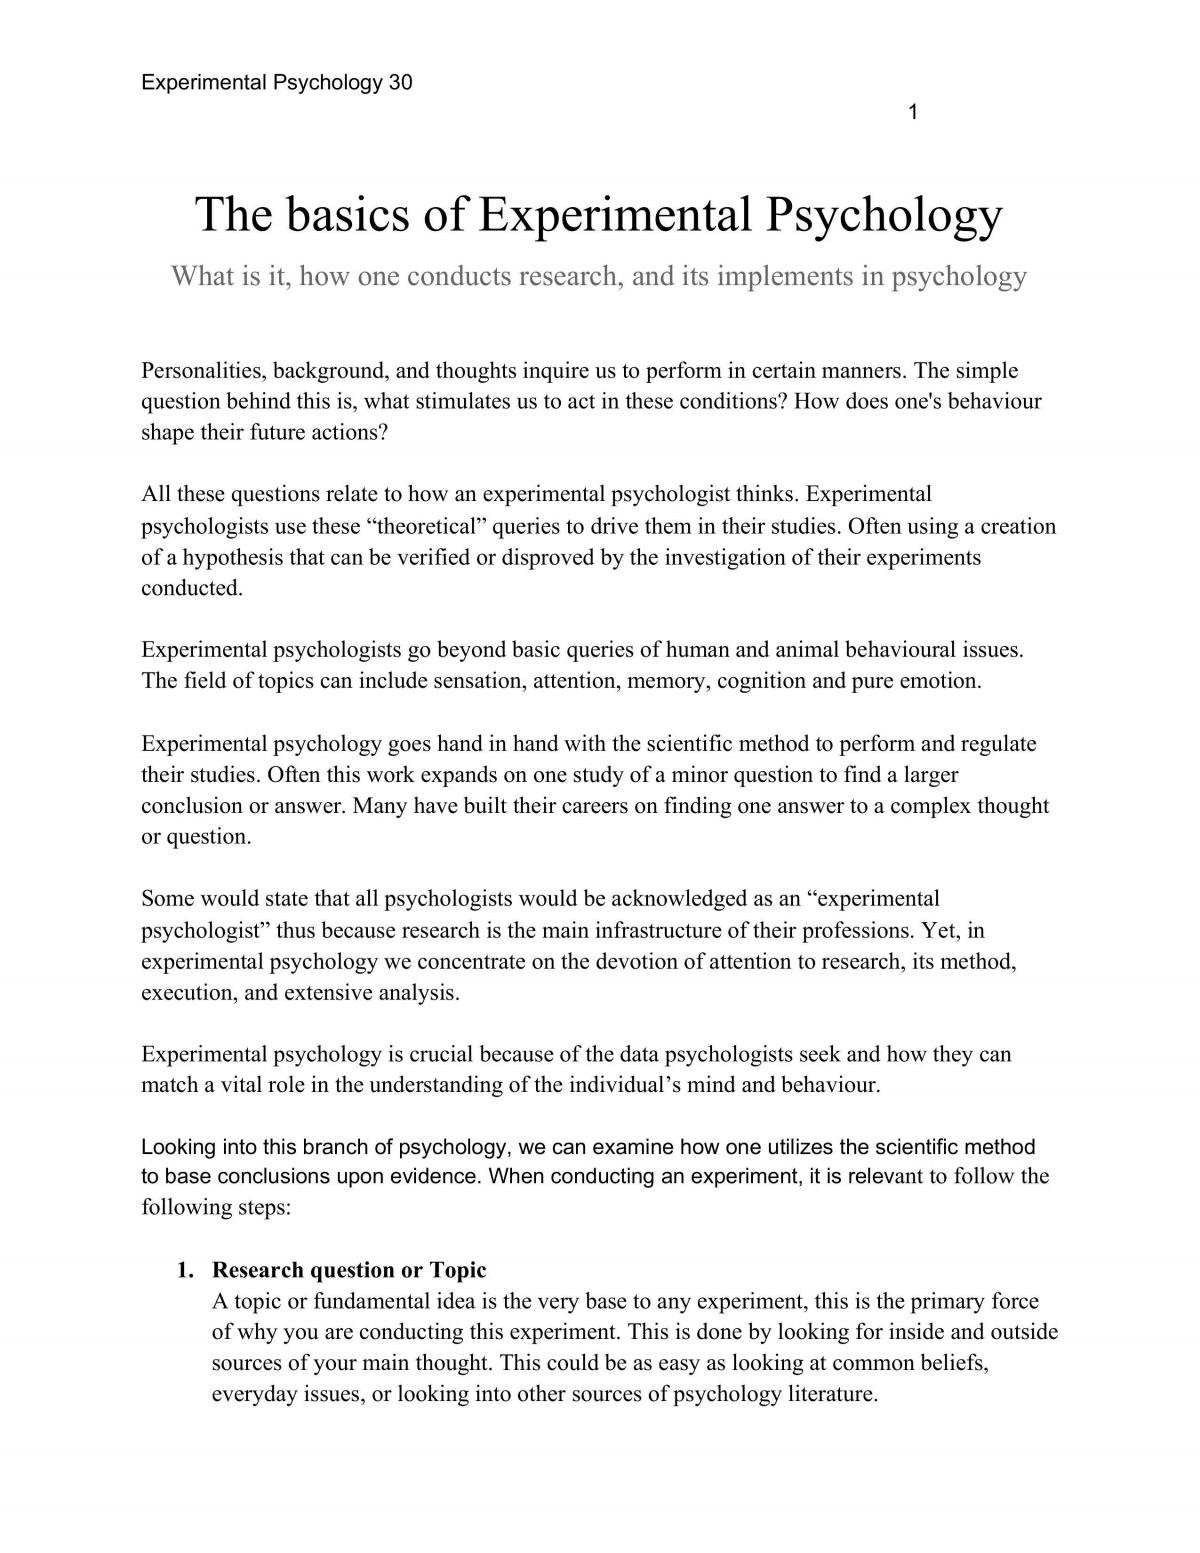 psychology essay topics